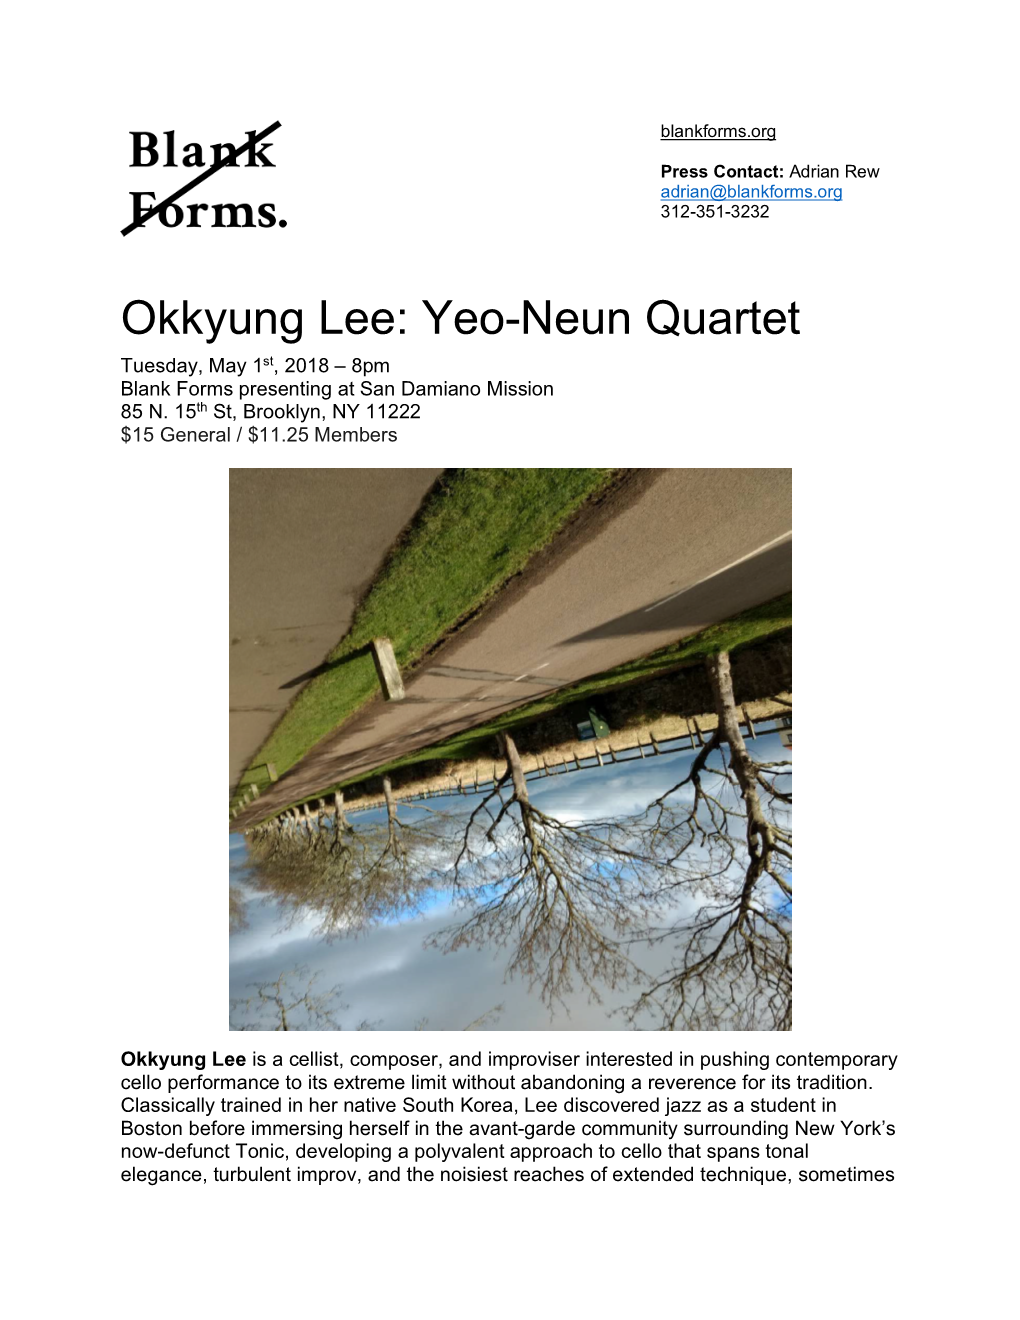 Okkyung Lee: Yeo-Neun Quartet